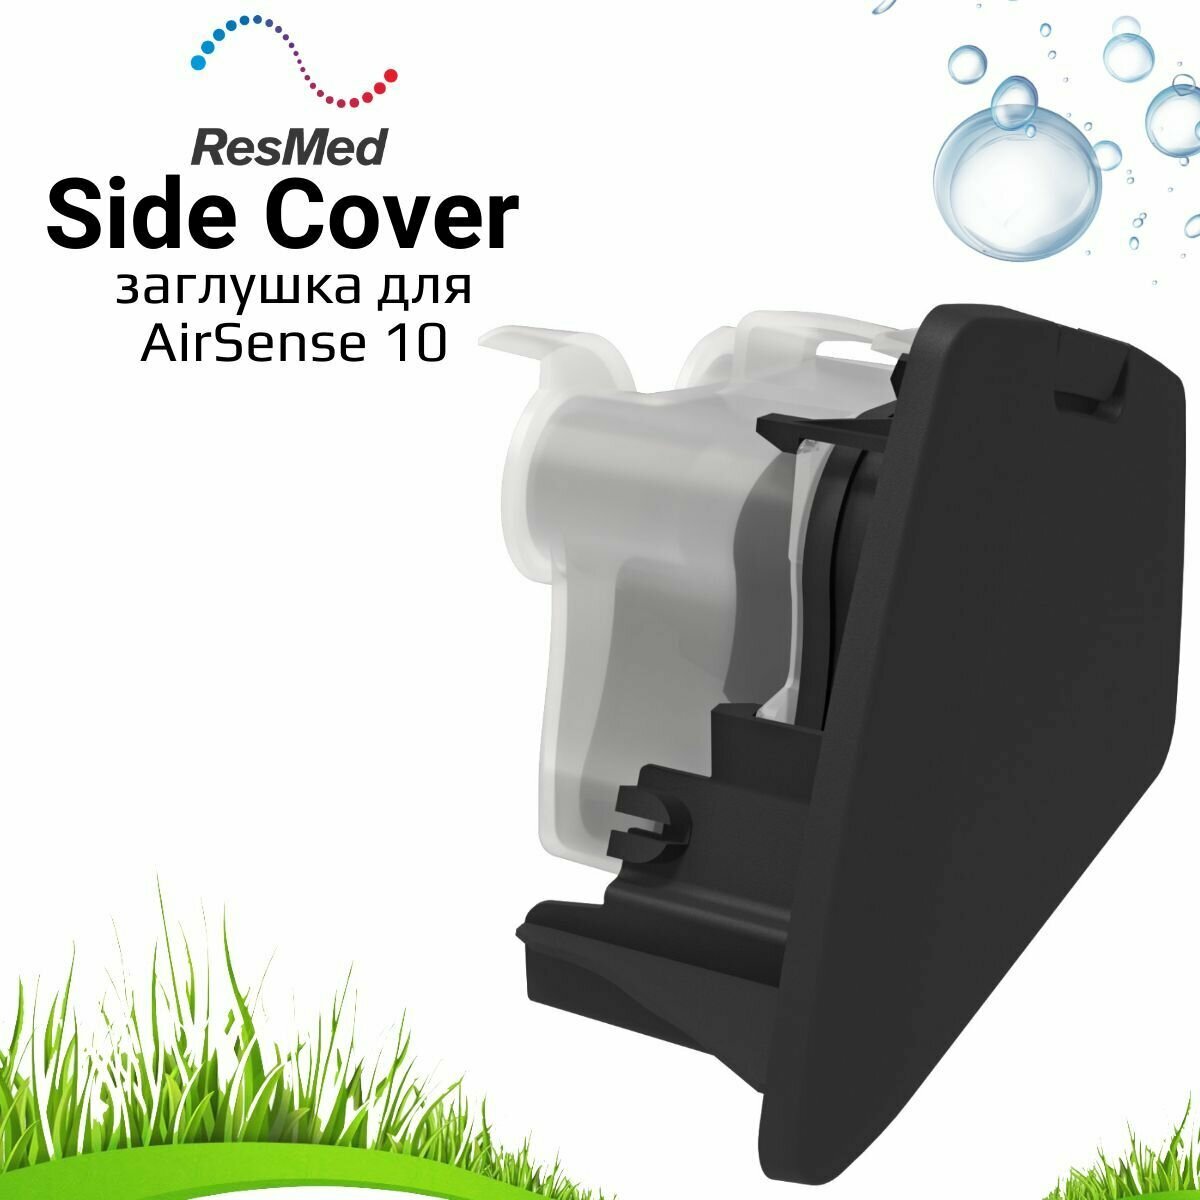 ResMed S10 Side Cover - заглушка для СИПАП прибора